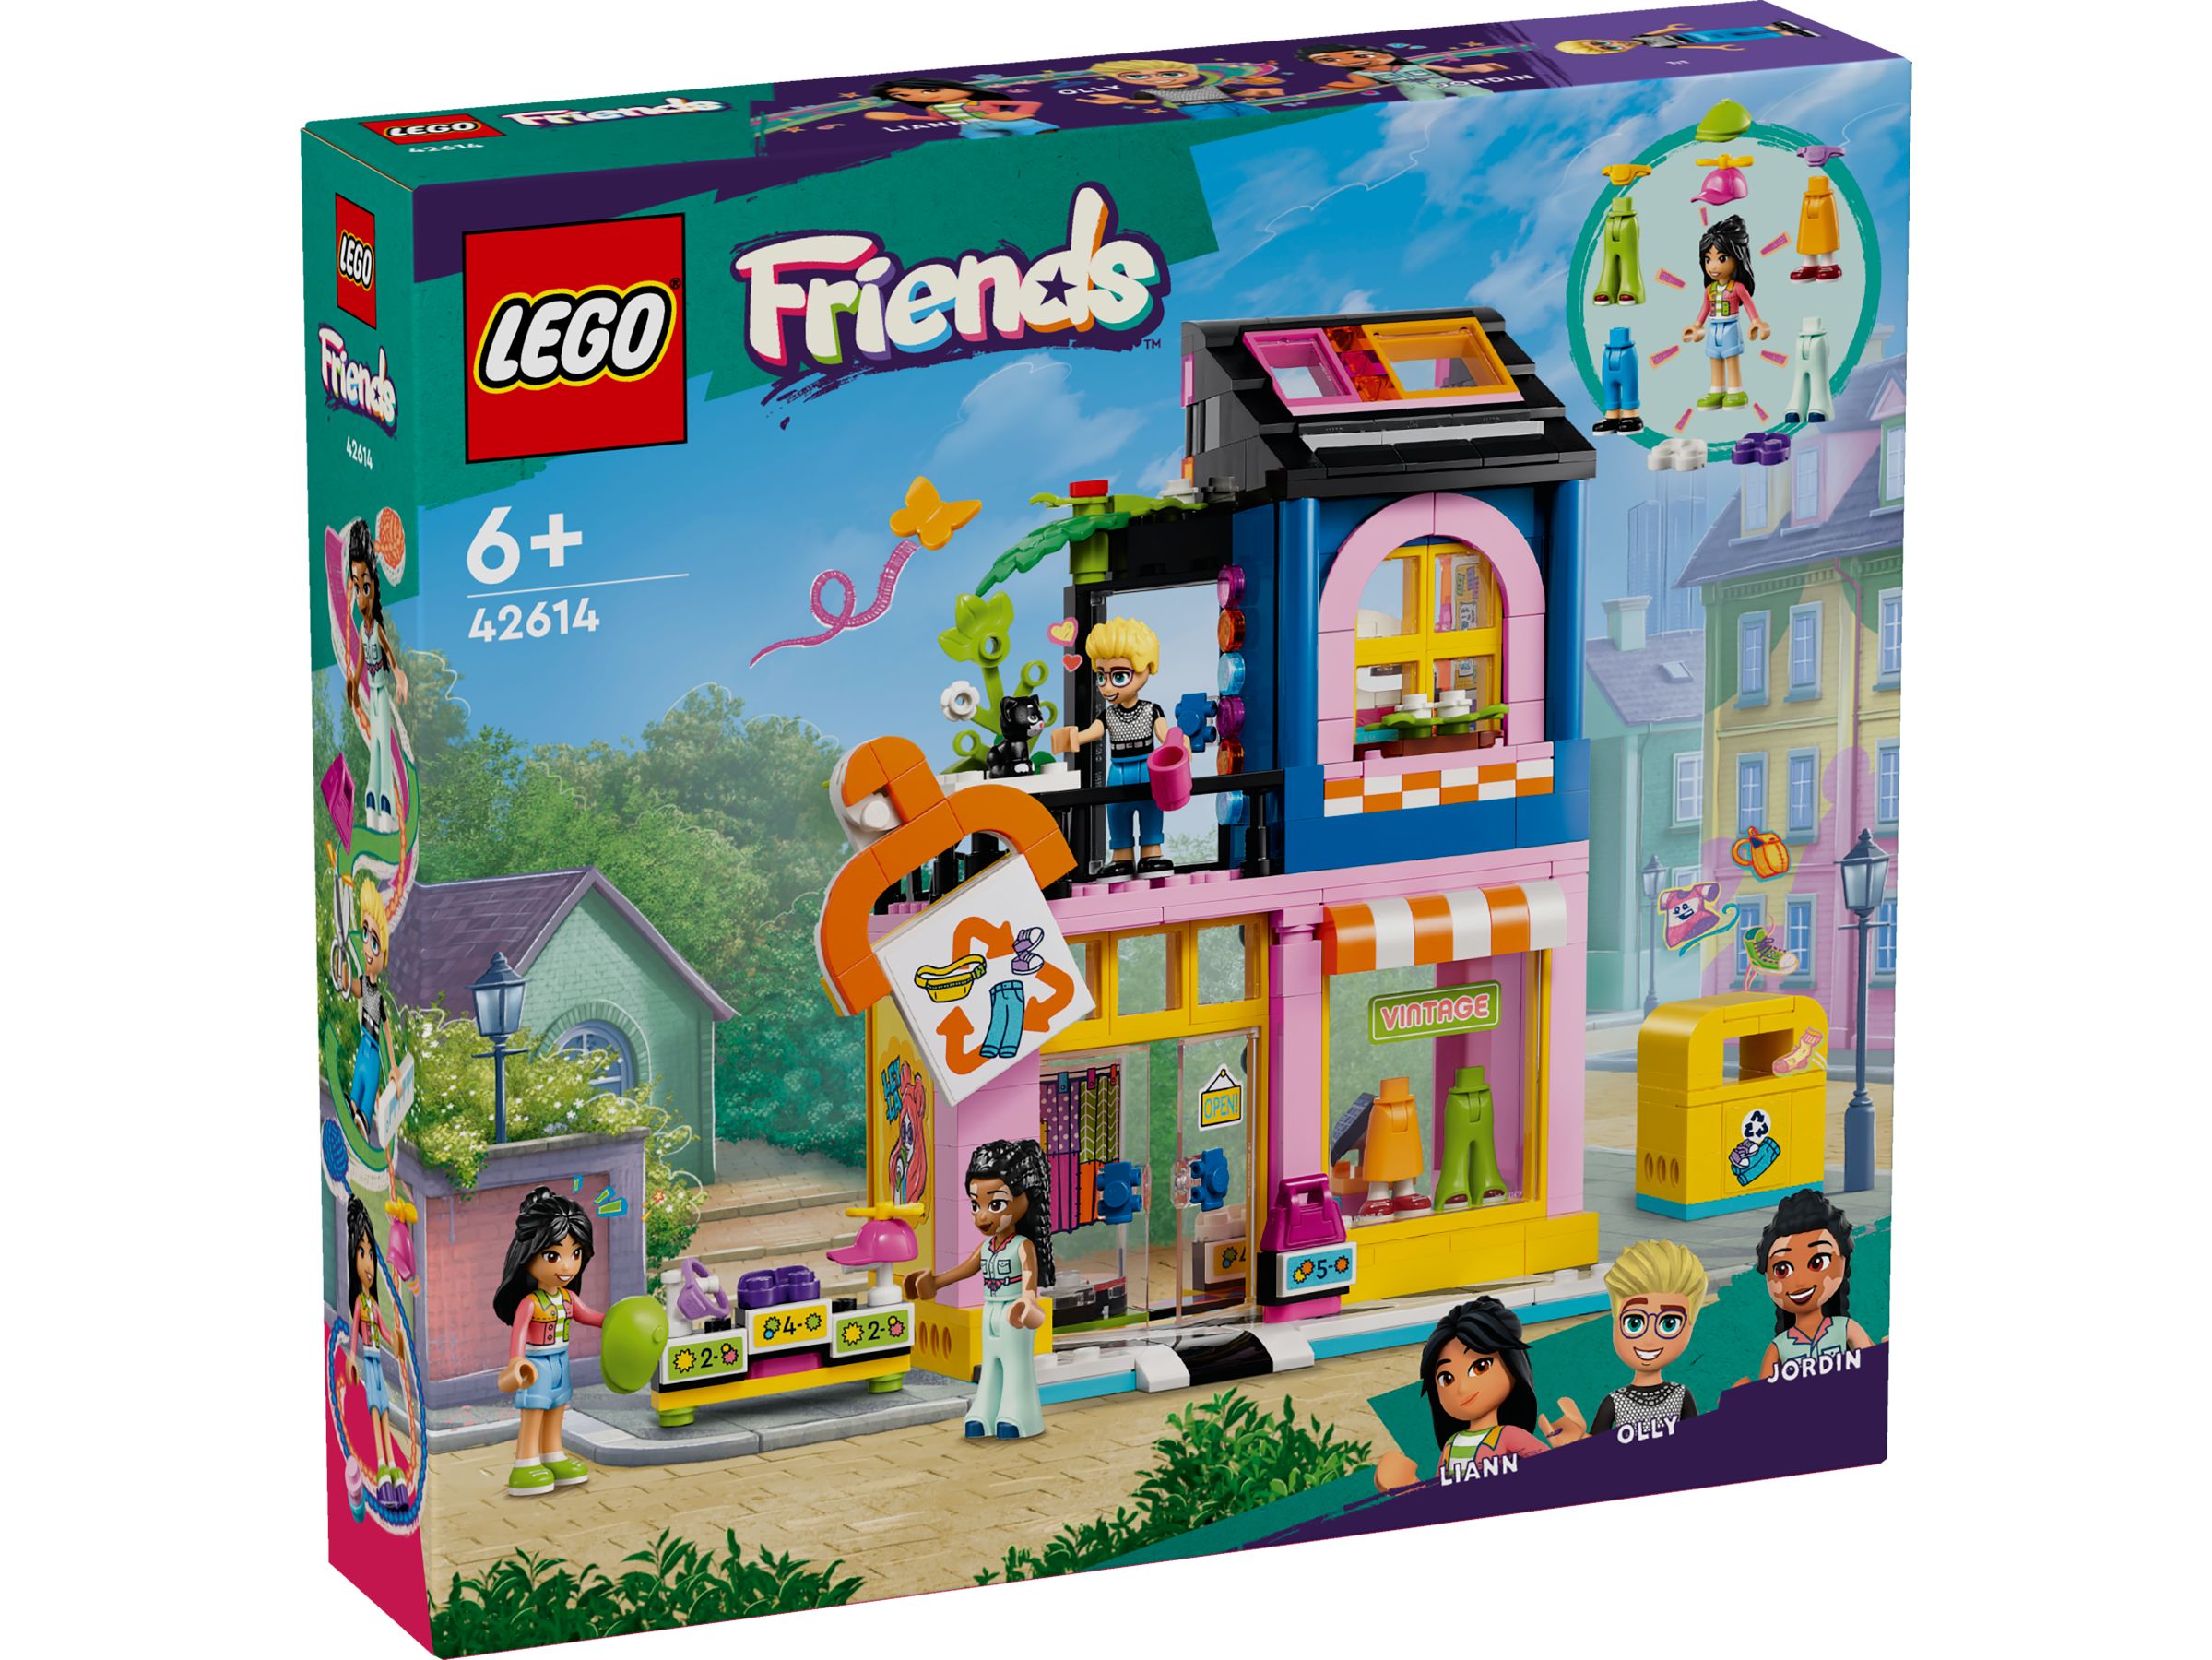 LEGO Friends 42614 Vintage-Modegeschäft LEGO_42614_Box1_v29.jpg